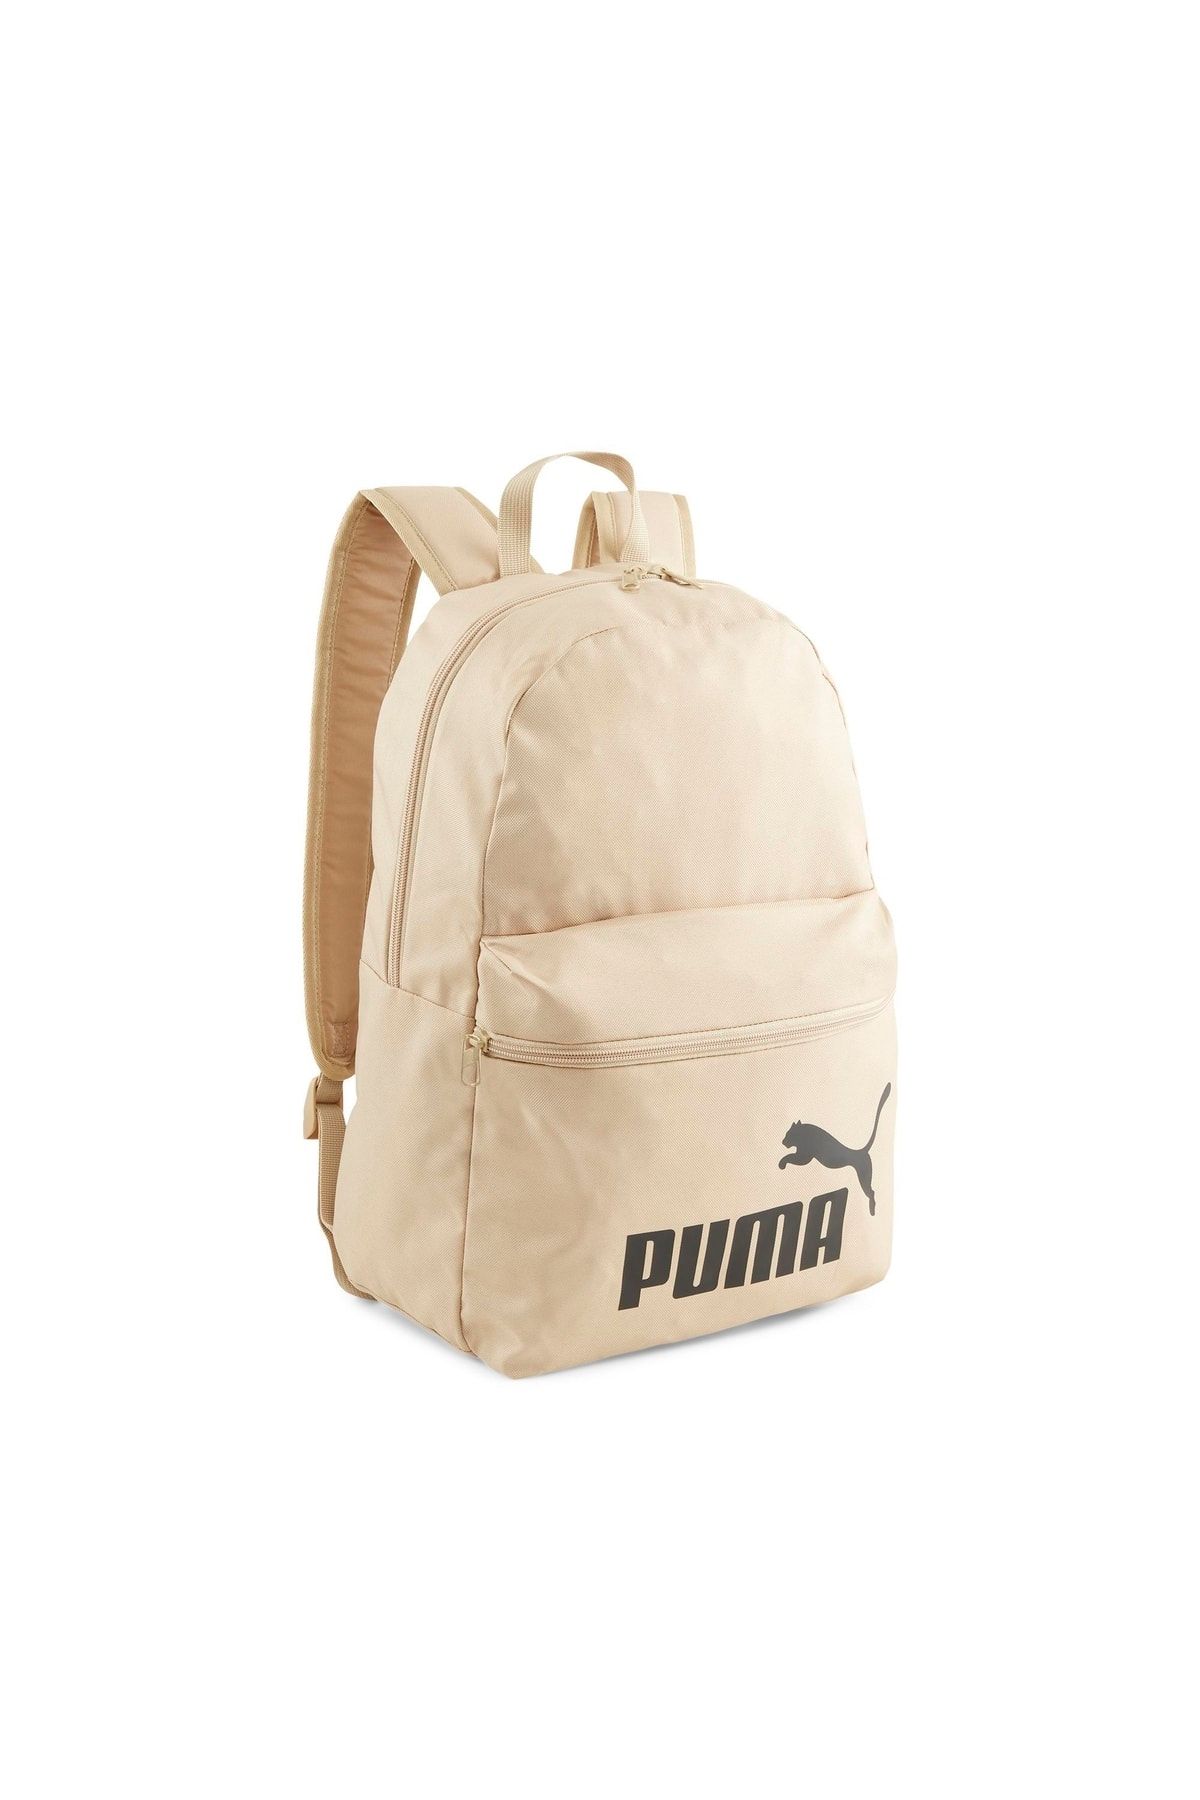 Puma Phase Backpack Sand Dune